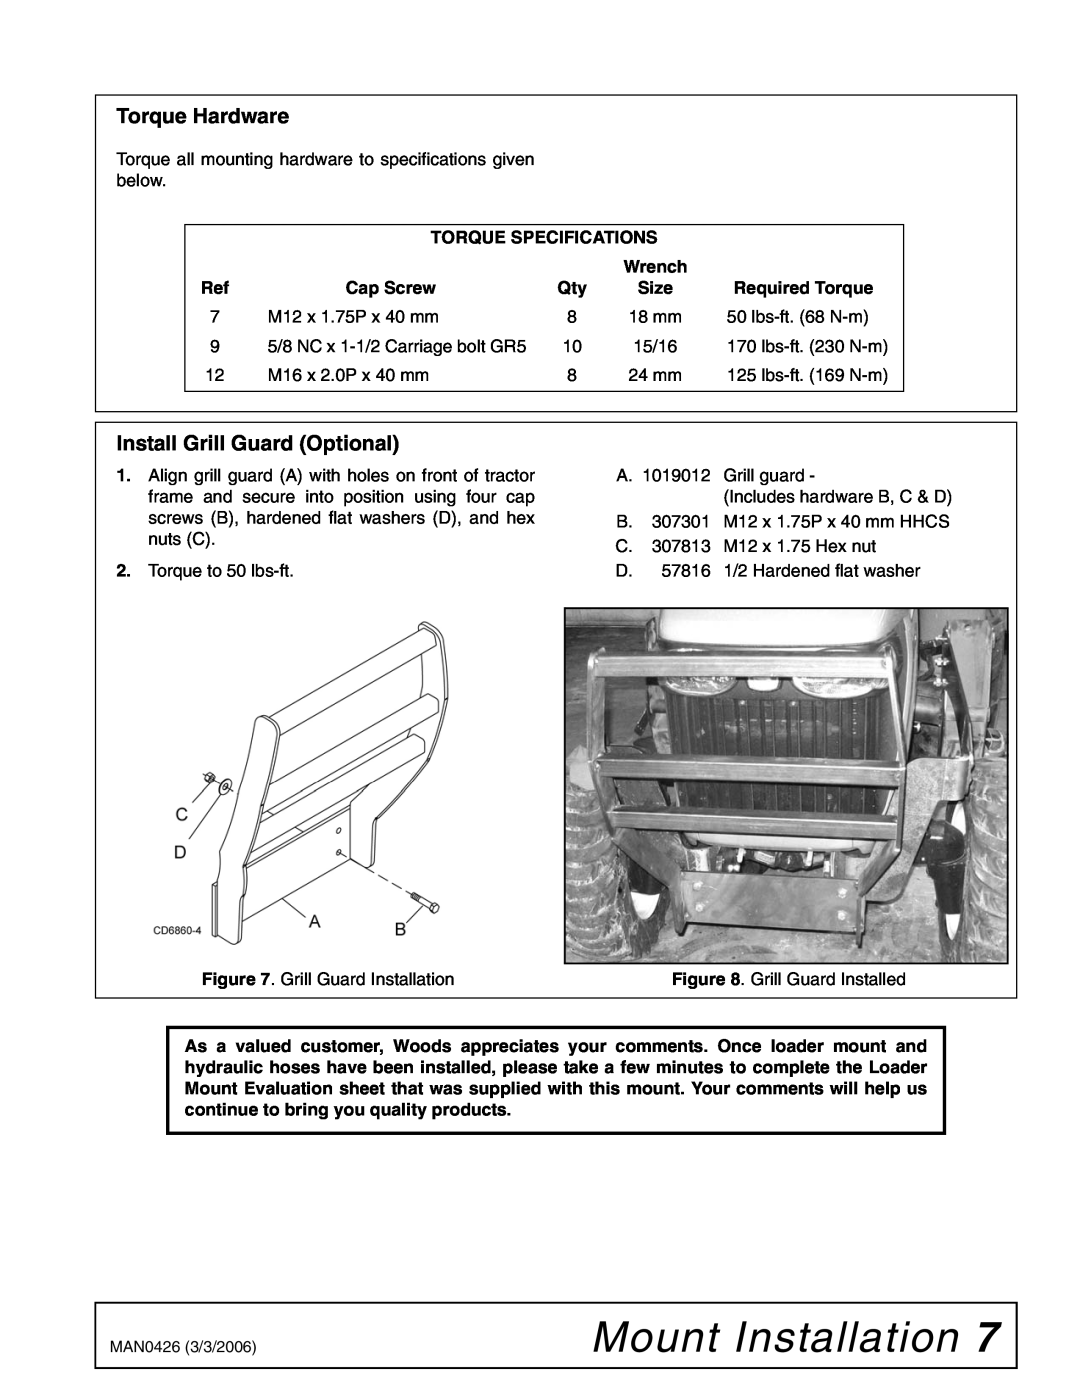 Woods Equipment 211716 installation manual Torque Hardware, Install Grill Guard Optional, Mount Installation 